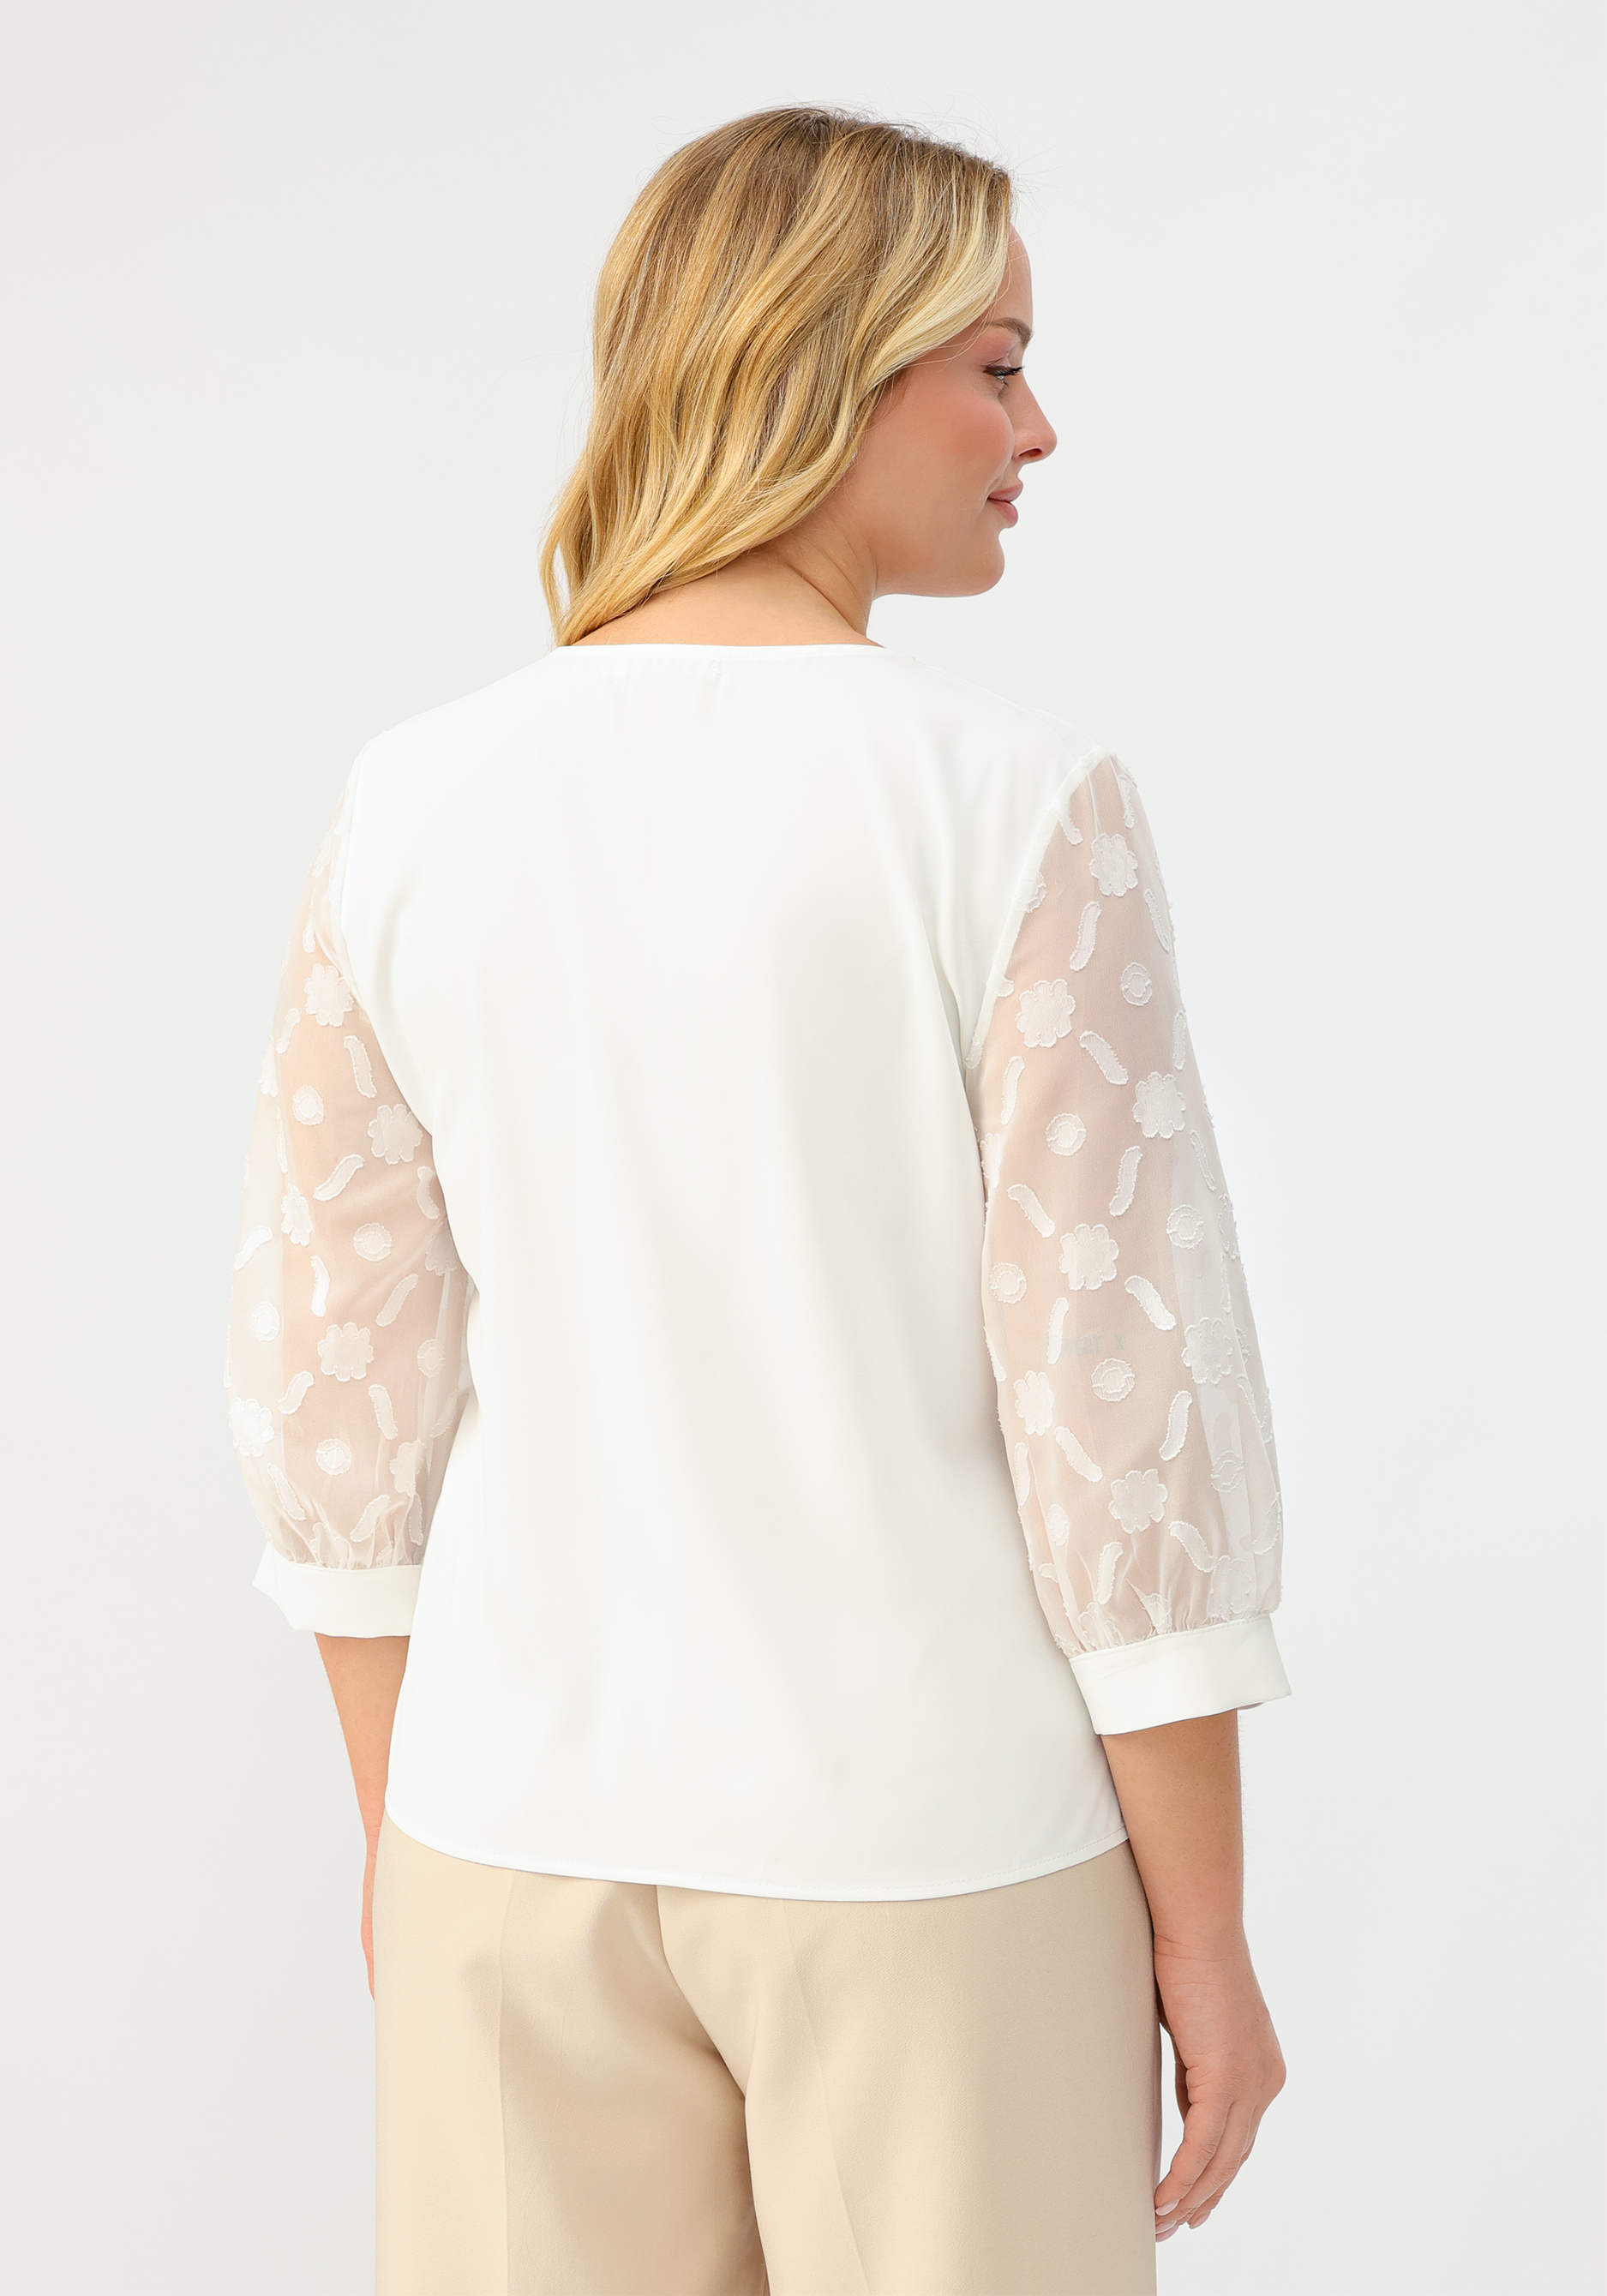 Блуза с шифоновыми рукавами 3 / 4 No name, размер 52-54, цвет белый - фото 3